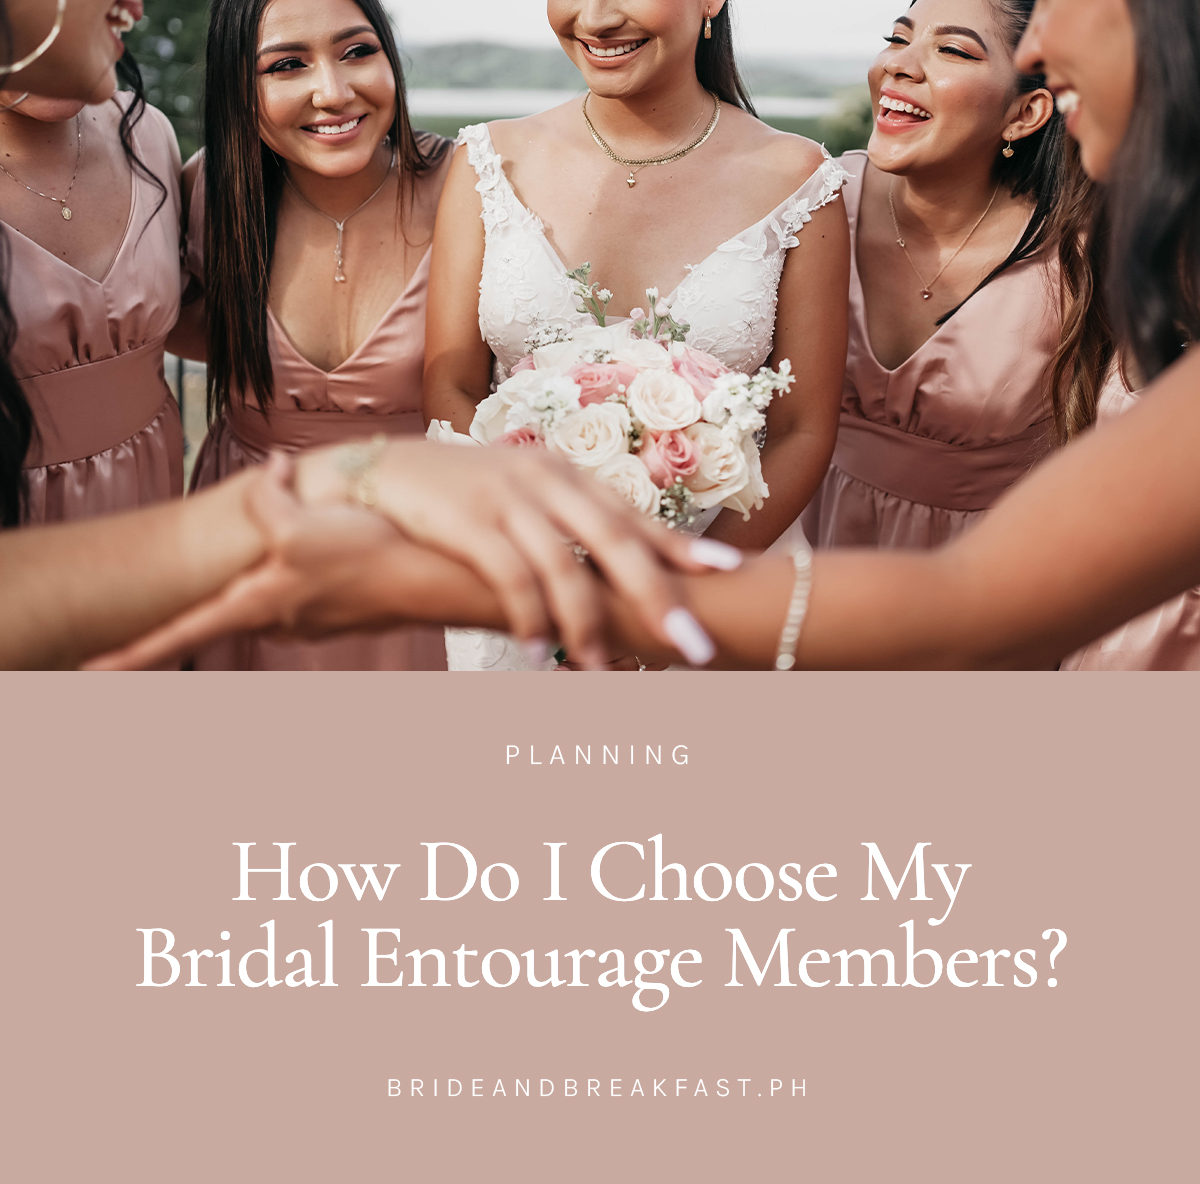 How Do I Choose My Bridal Entourage Members?